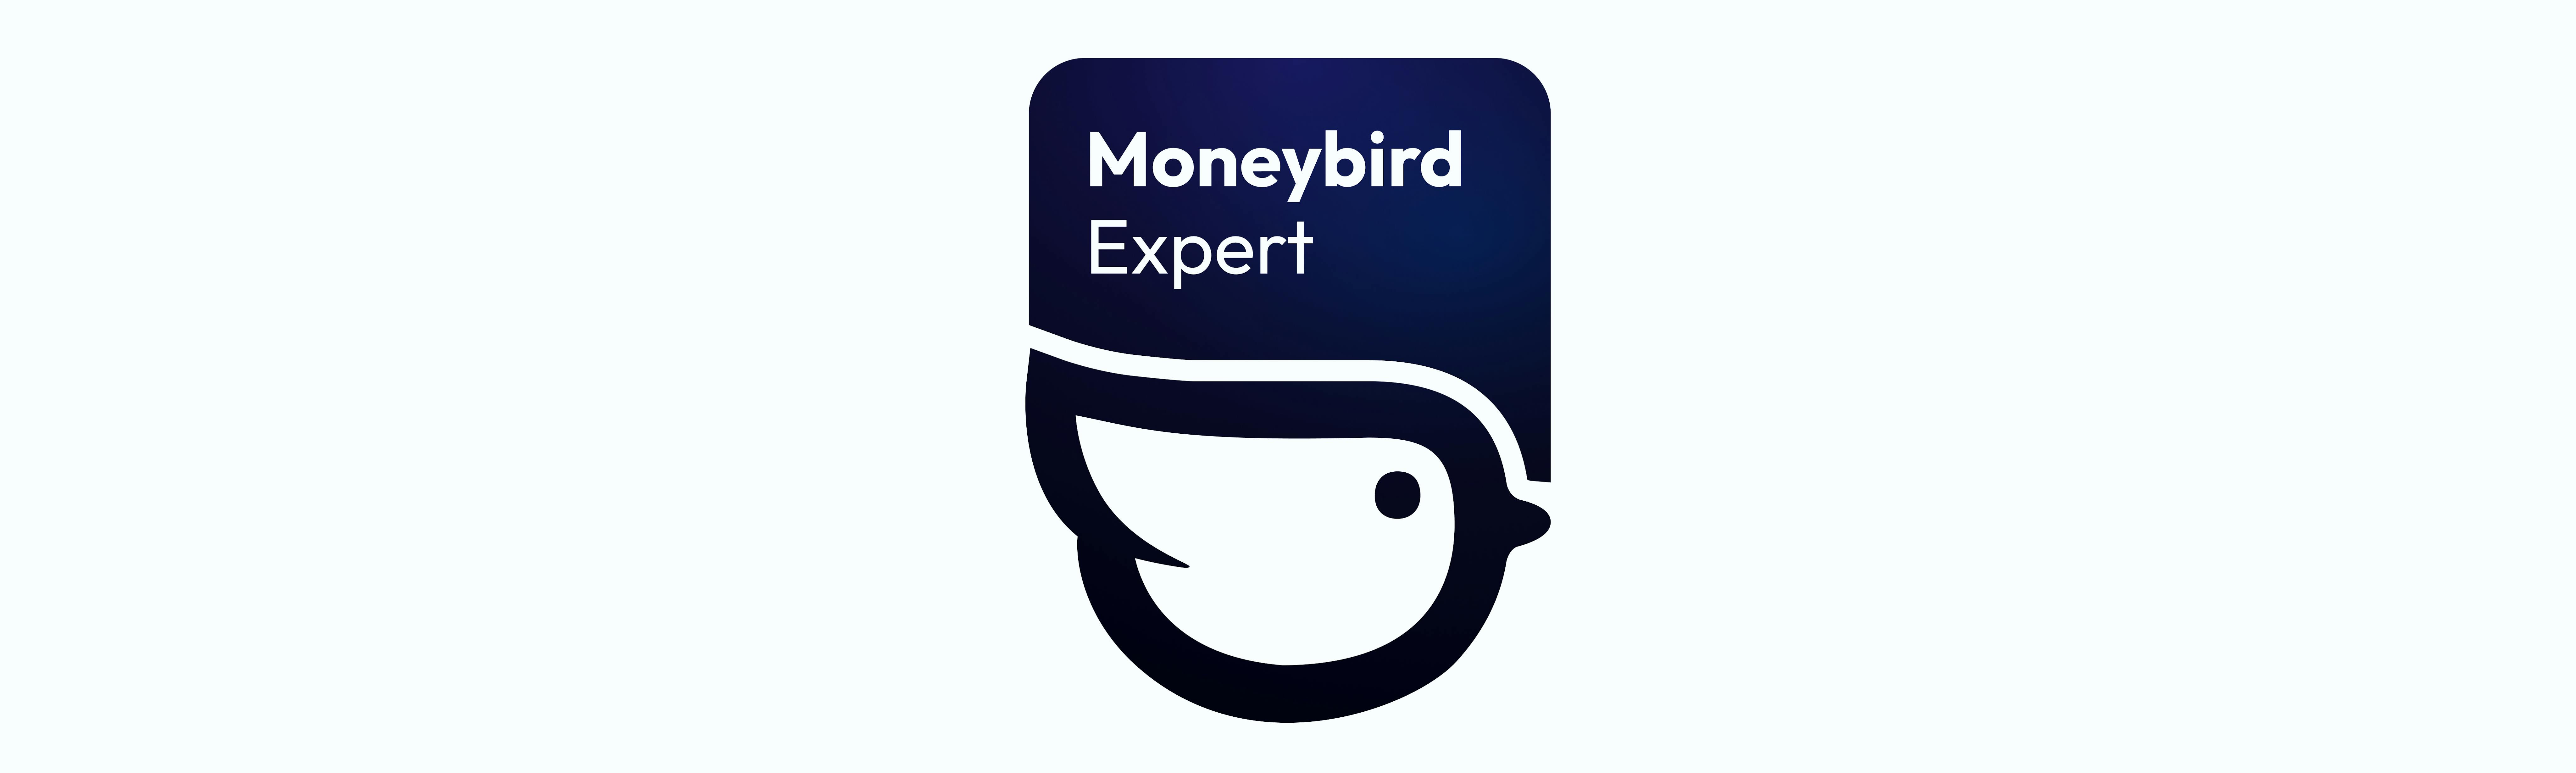 Moneybird expert label